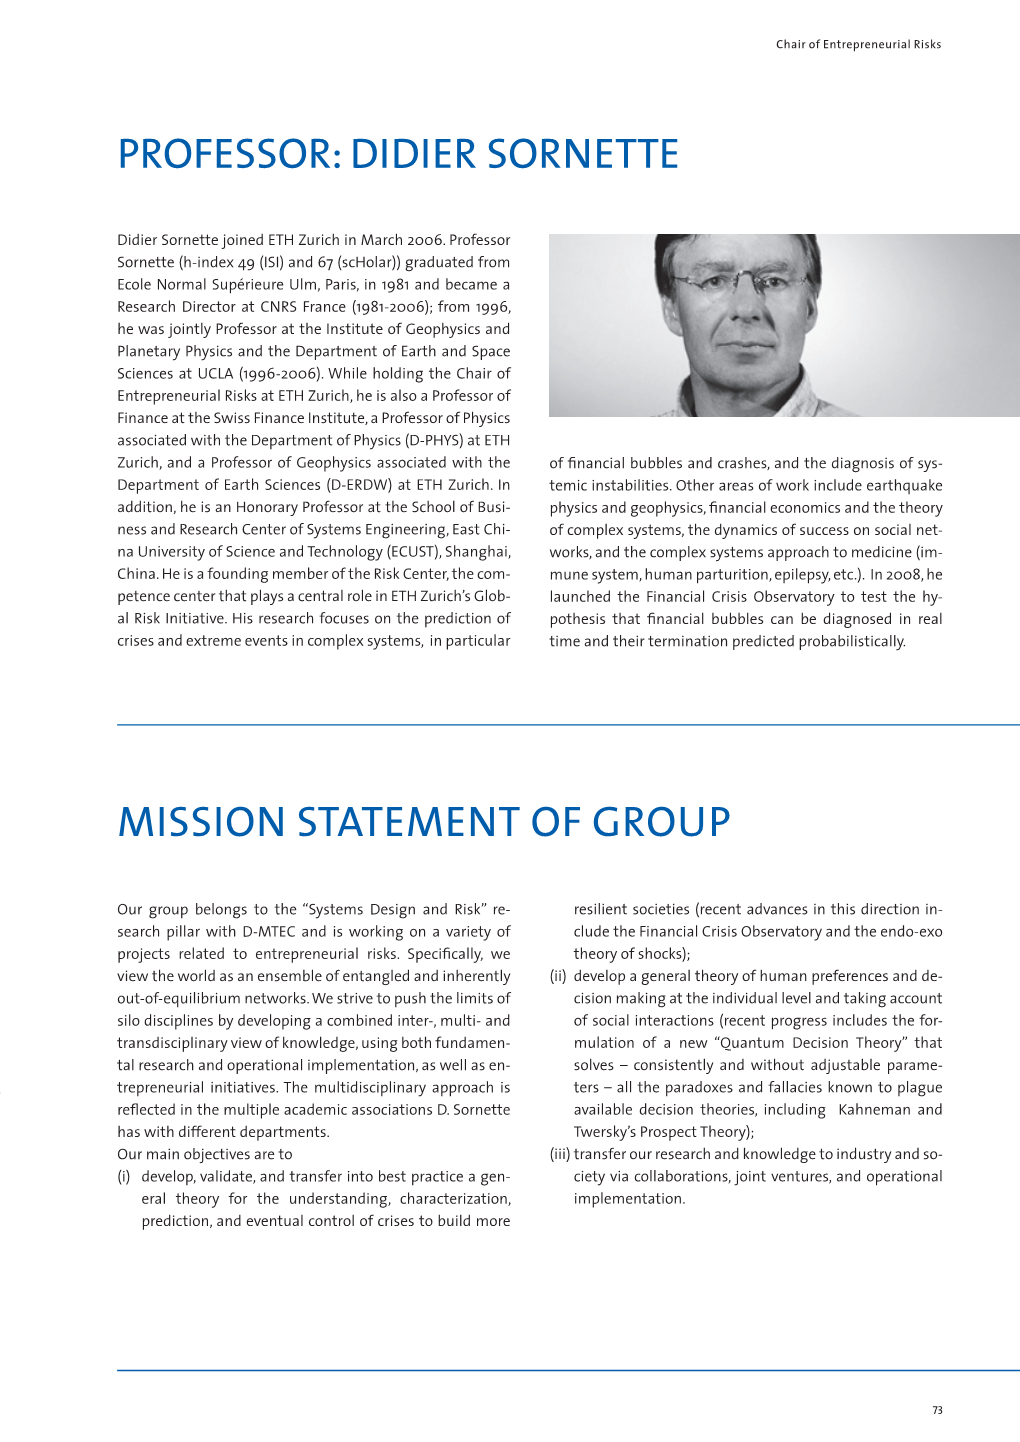 Professor: Didier Sornette Mission Statement of Group